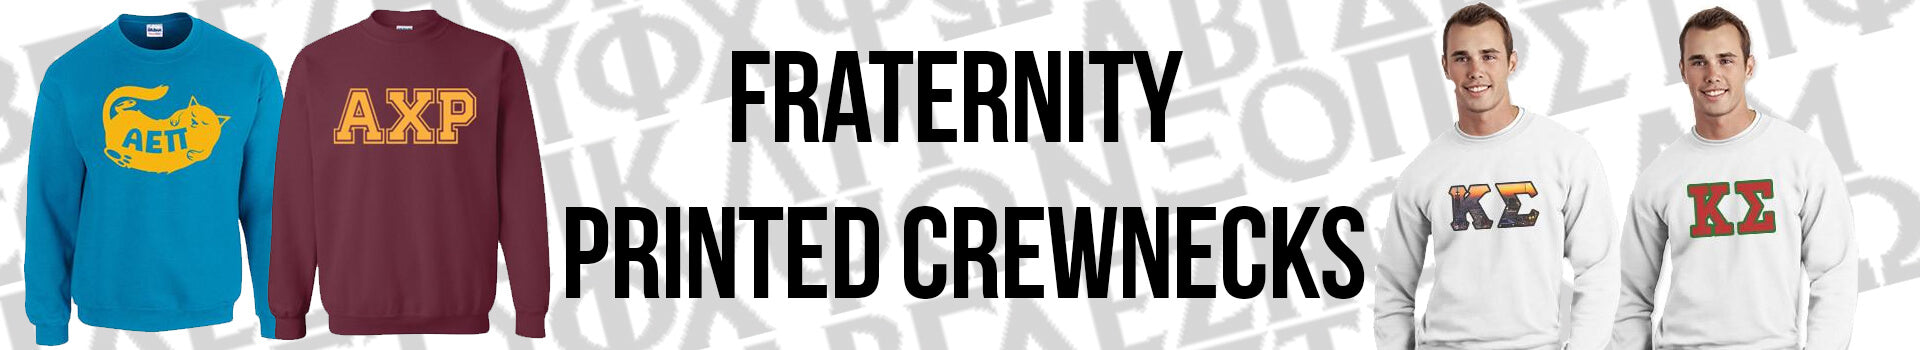 Greek Fraternity Printed Crewneck Sweatshirts